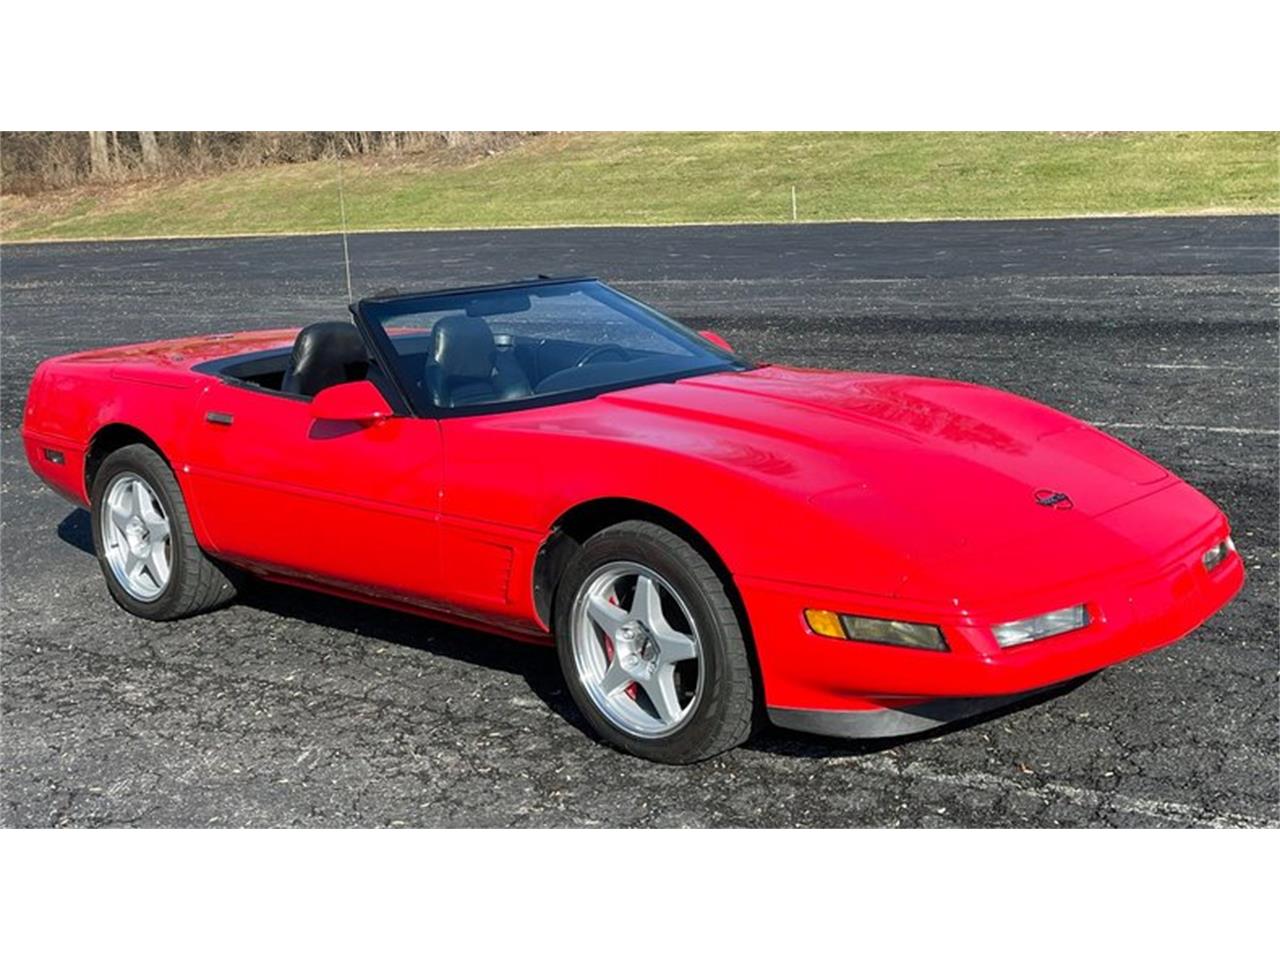 For Sale: 1996 Chevrolet Corvette in West Chester, Pennsylvania for sale in West Chester, PA